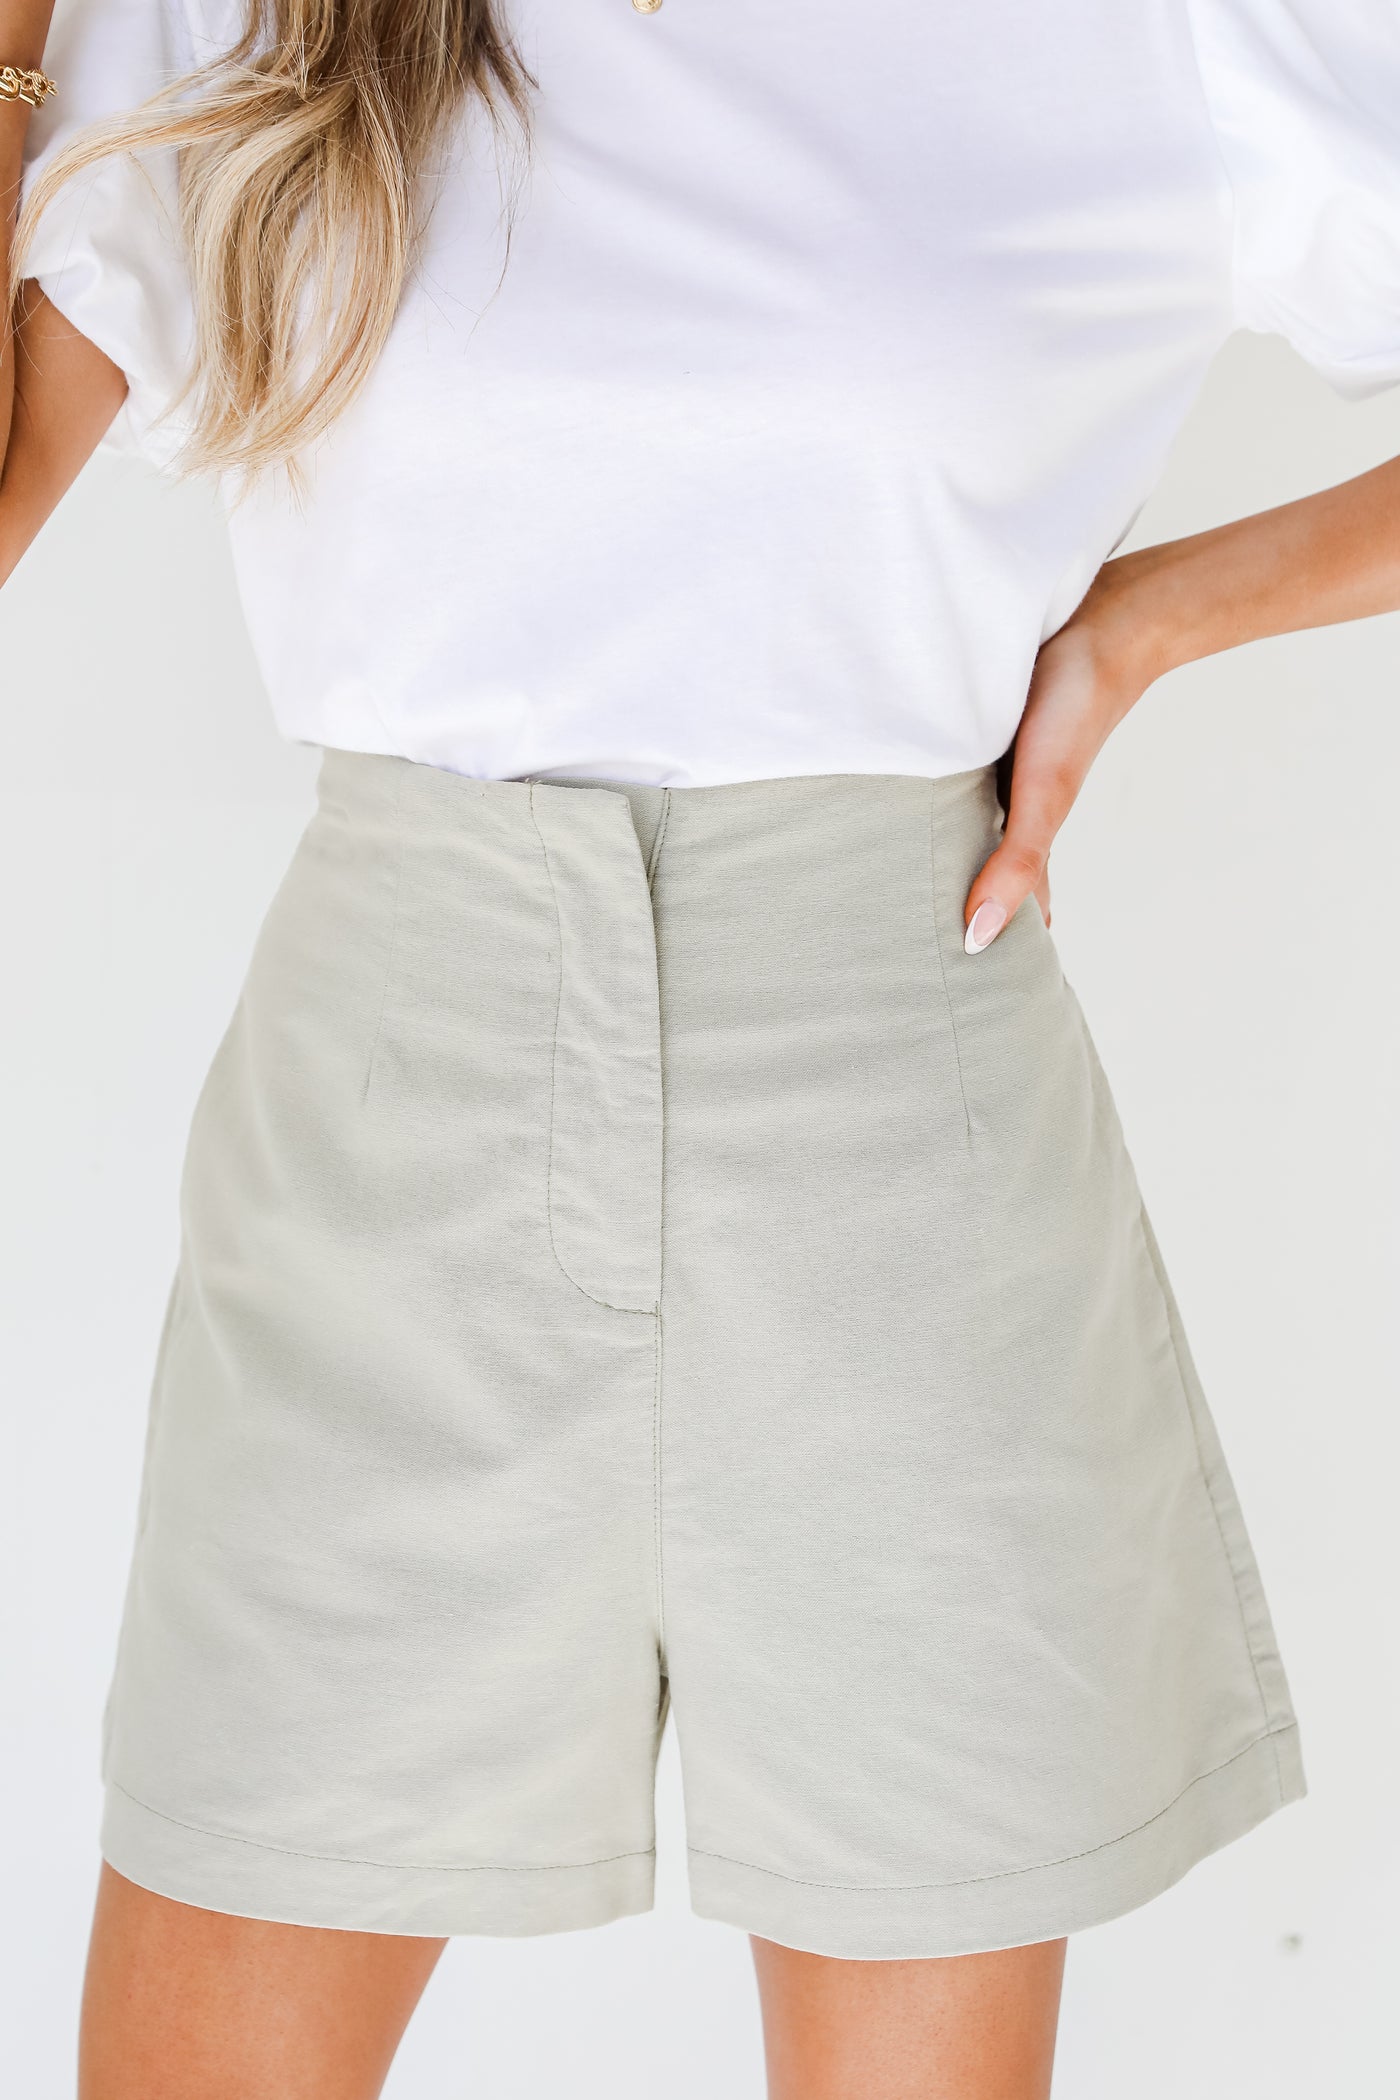 Linen Shorts in olive on model